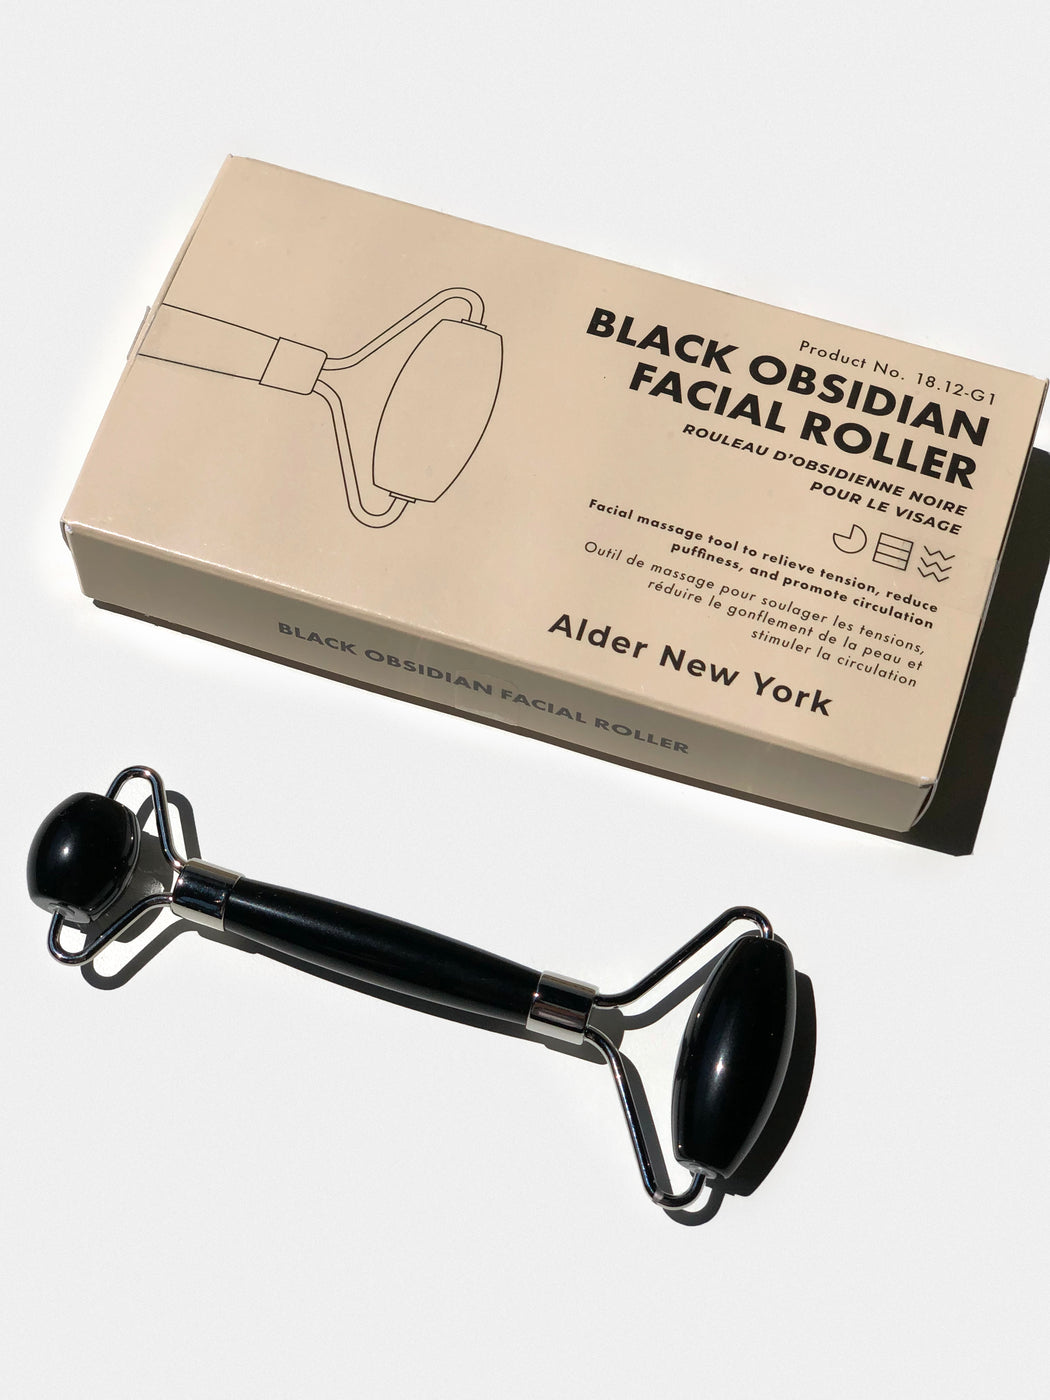 Alder New York - Black Obsidian Facial Roller